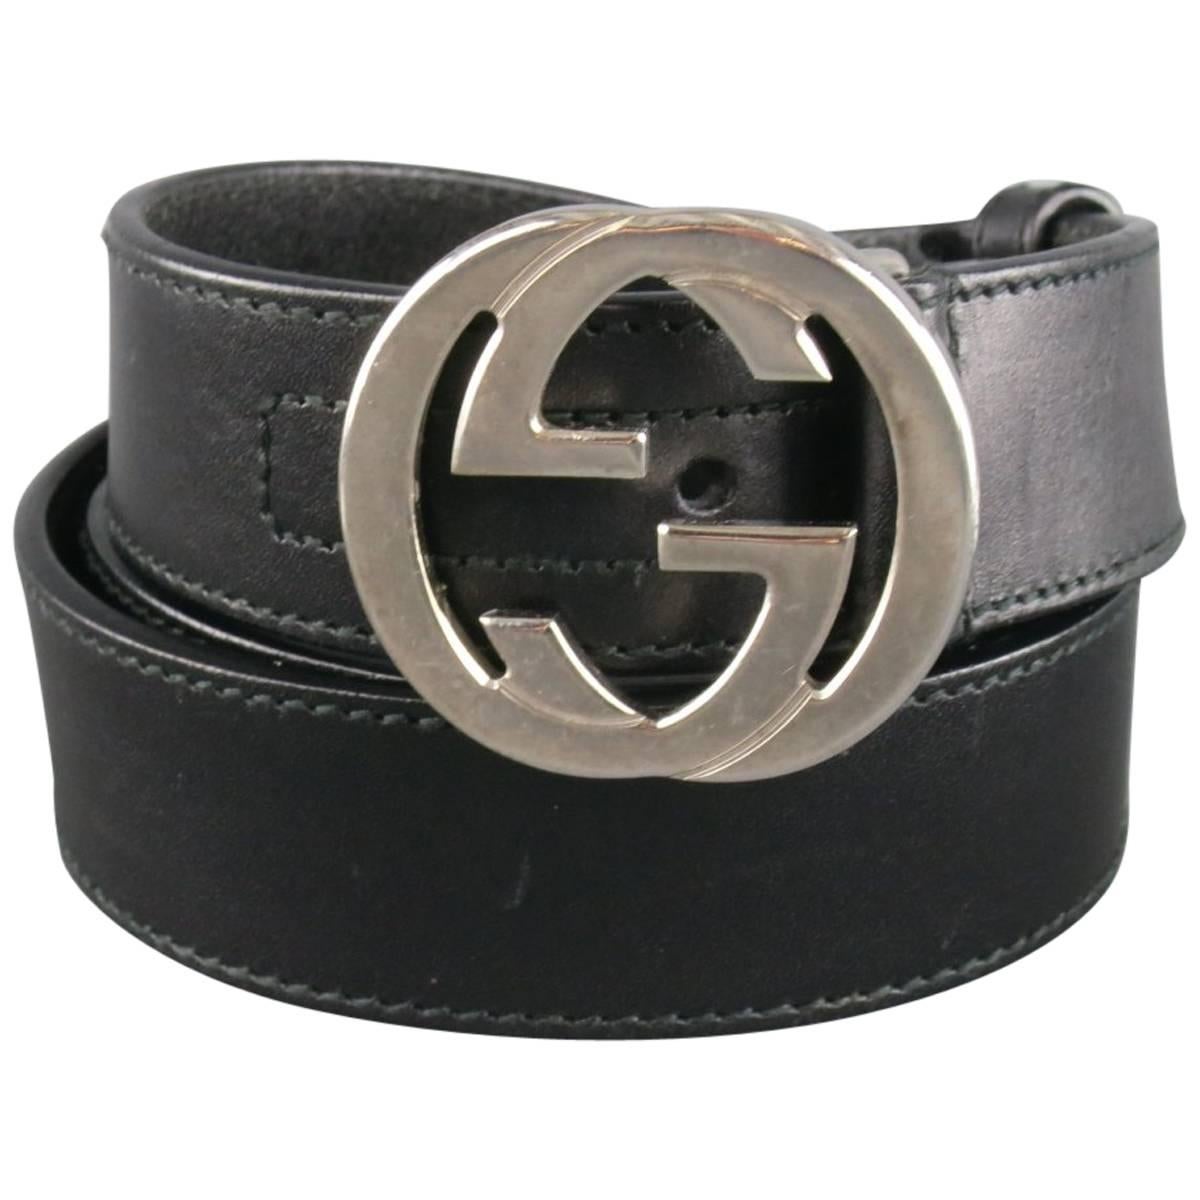 GUCCI Size 36 Black Leather Mini Silver Double G Buckle Belt